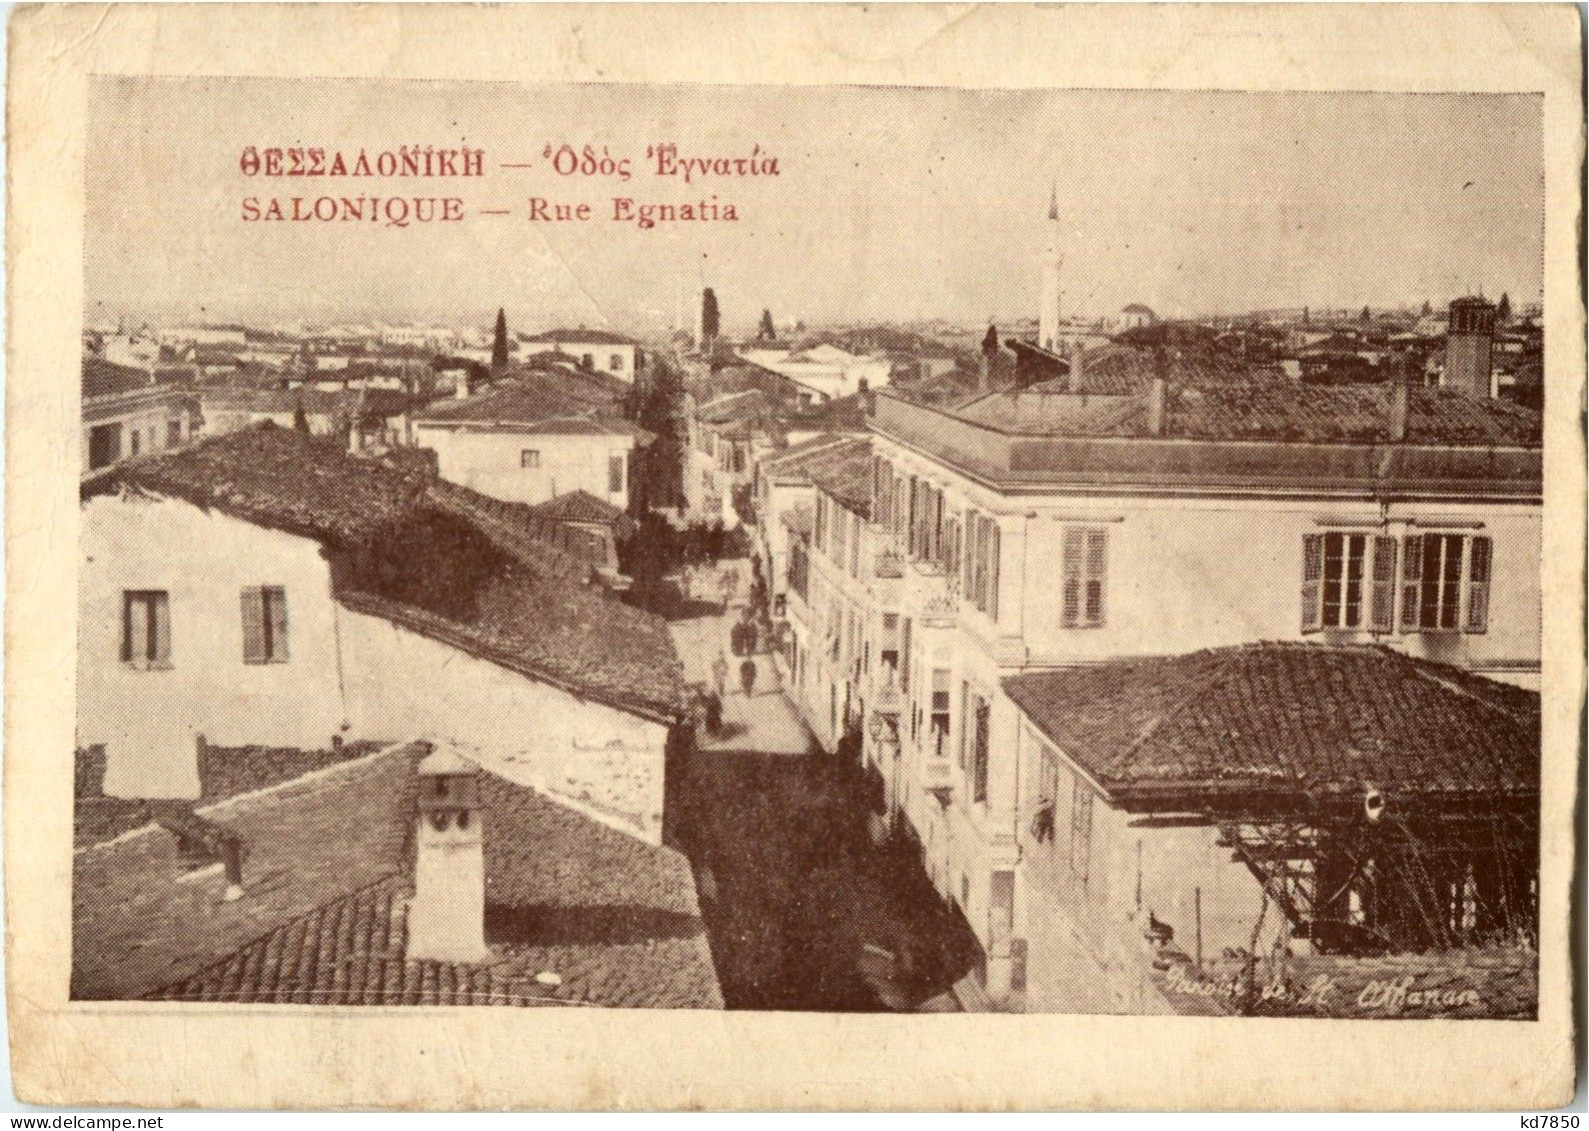 Salonique - Rue Egnatia - Griechenland